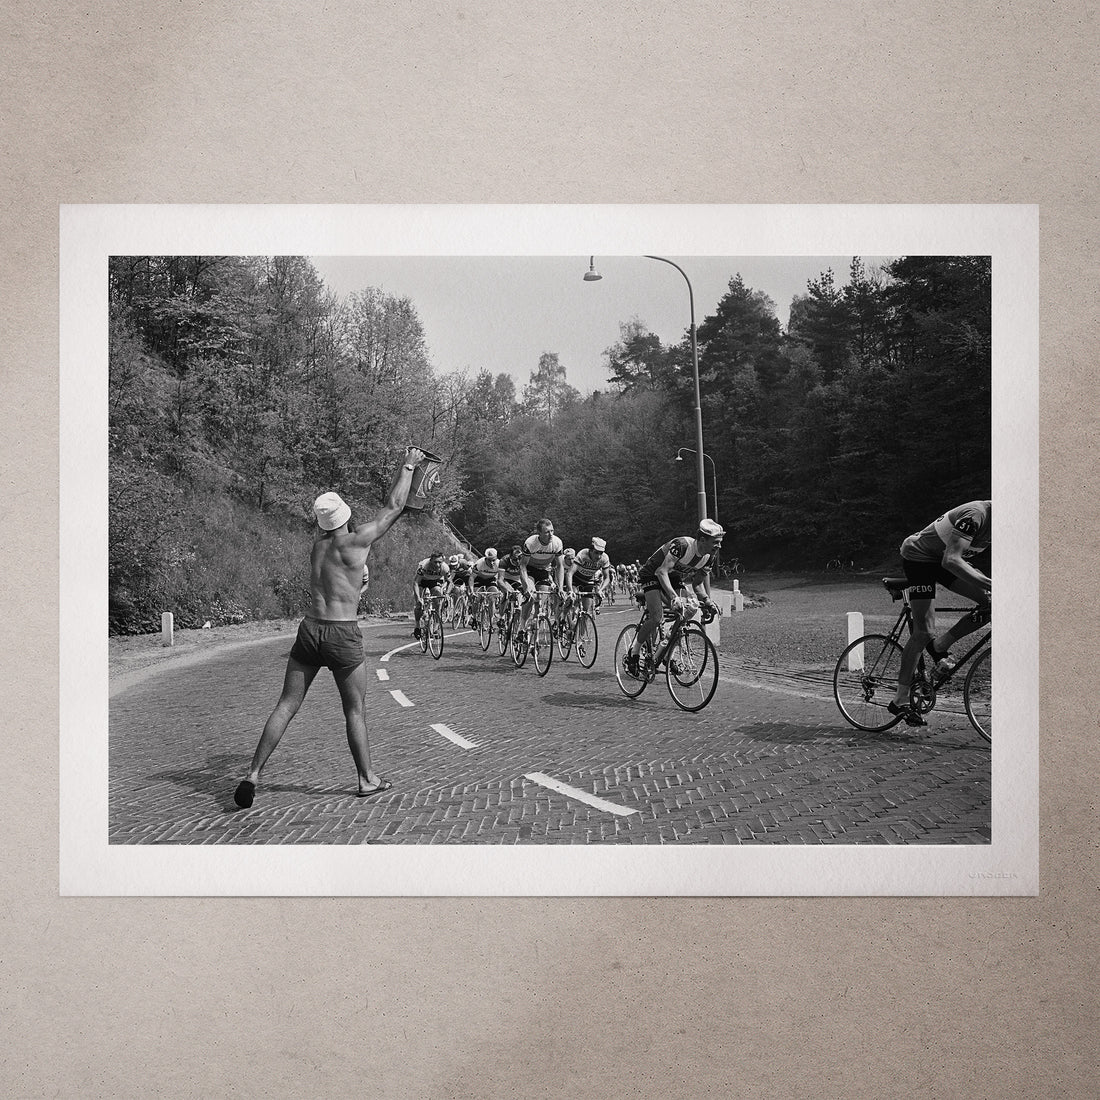 Ronde van Nederland, Stay Cool by Eric Koch, 1965